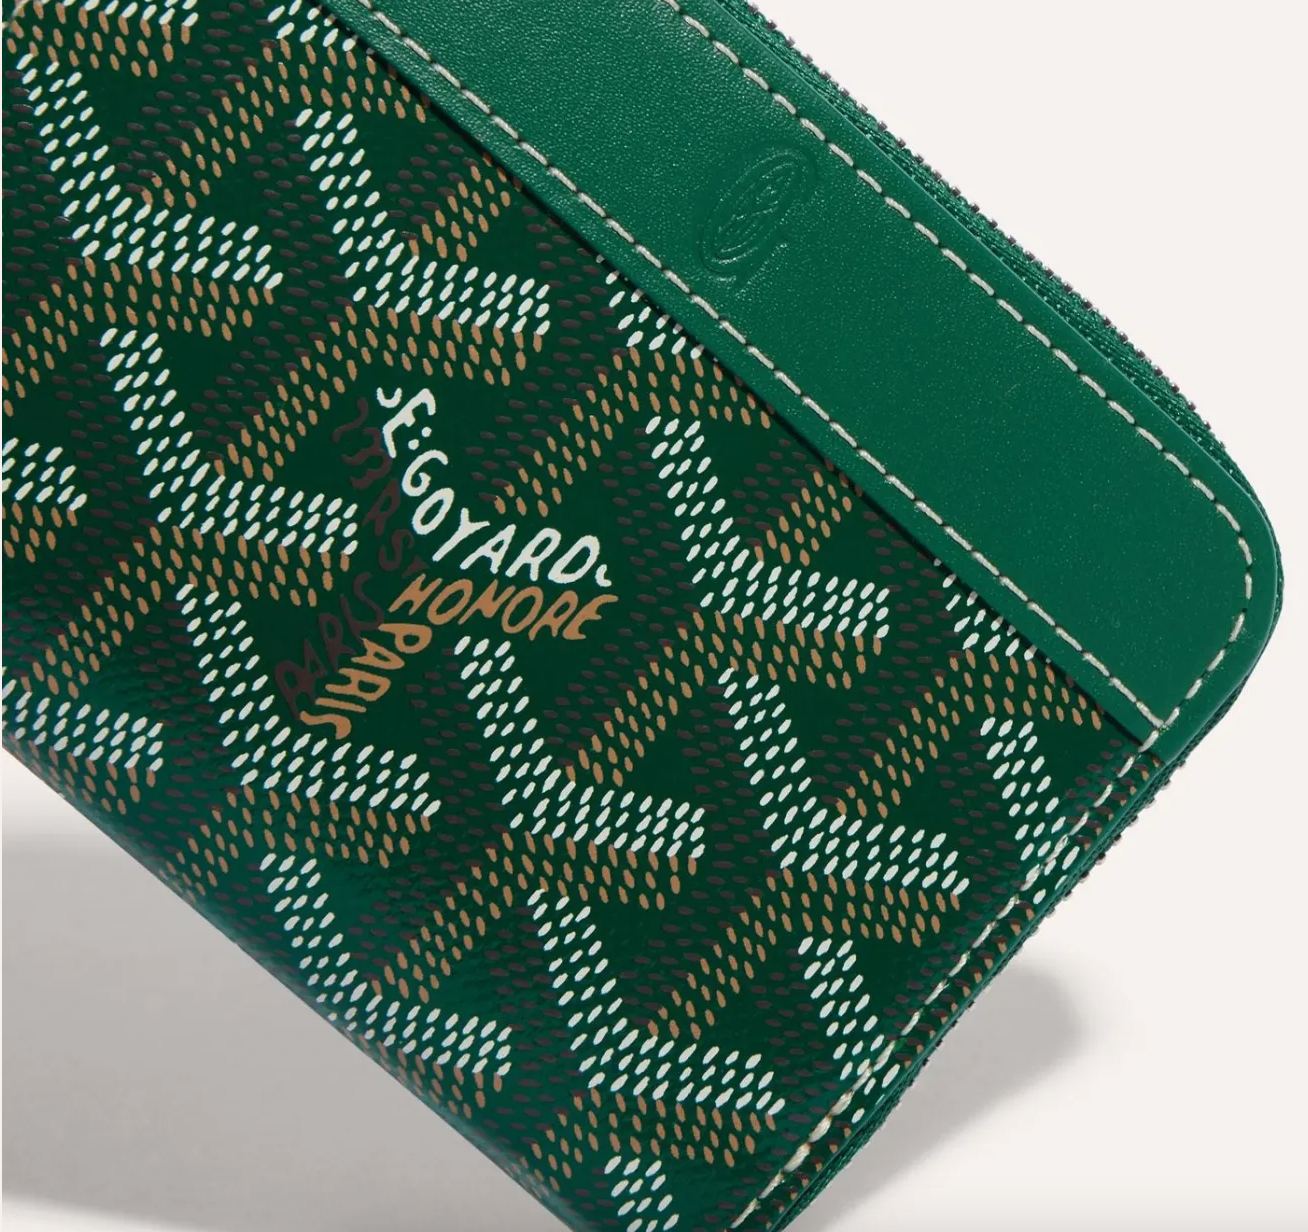 Goyard Matignon Mini Zip Wallet